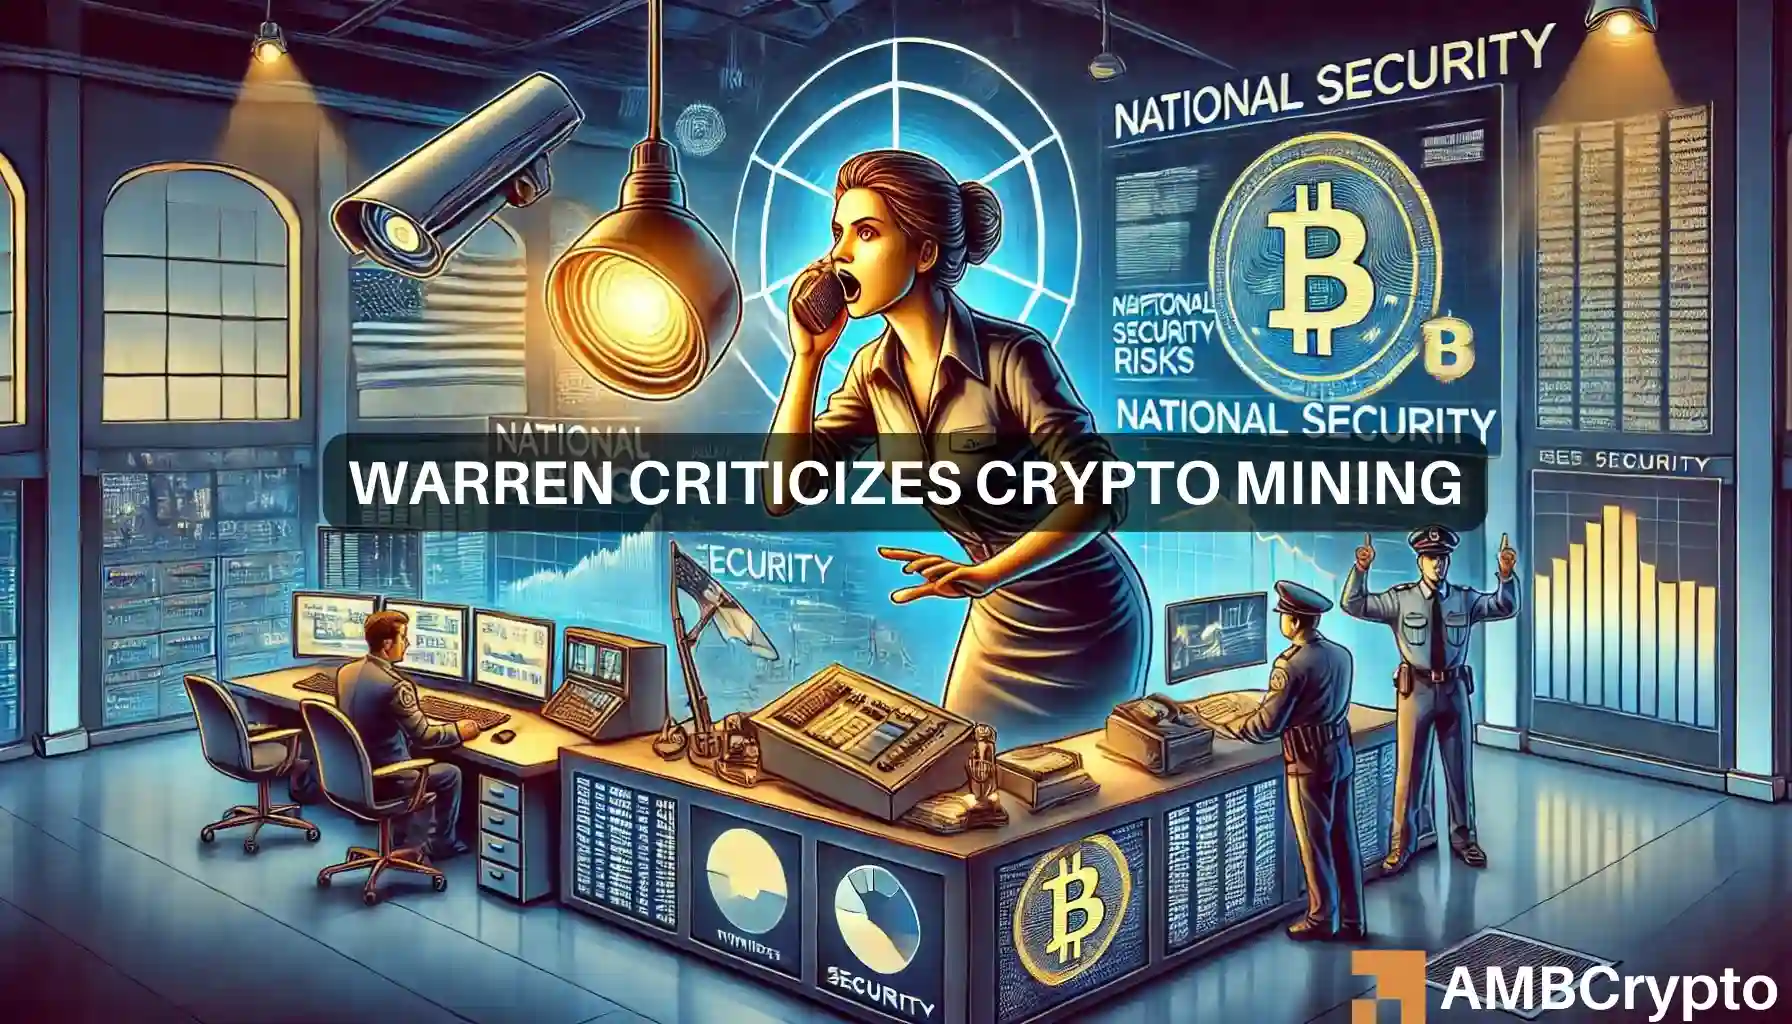 Crypto-mining poses national security risks – Senator Warren logo